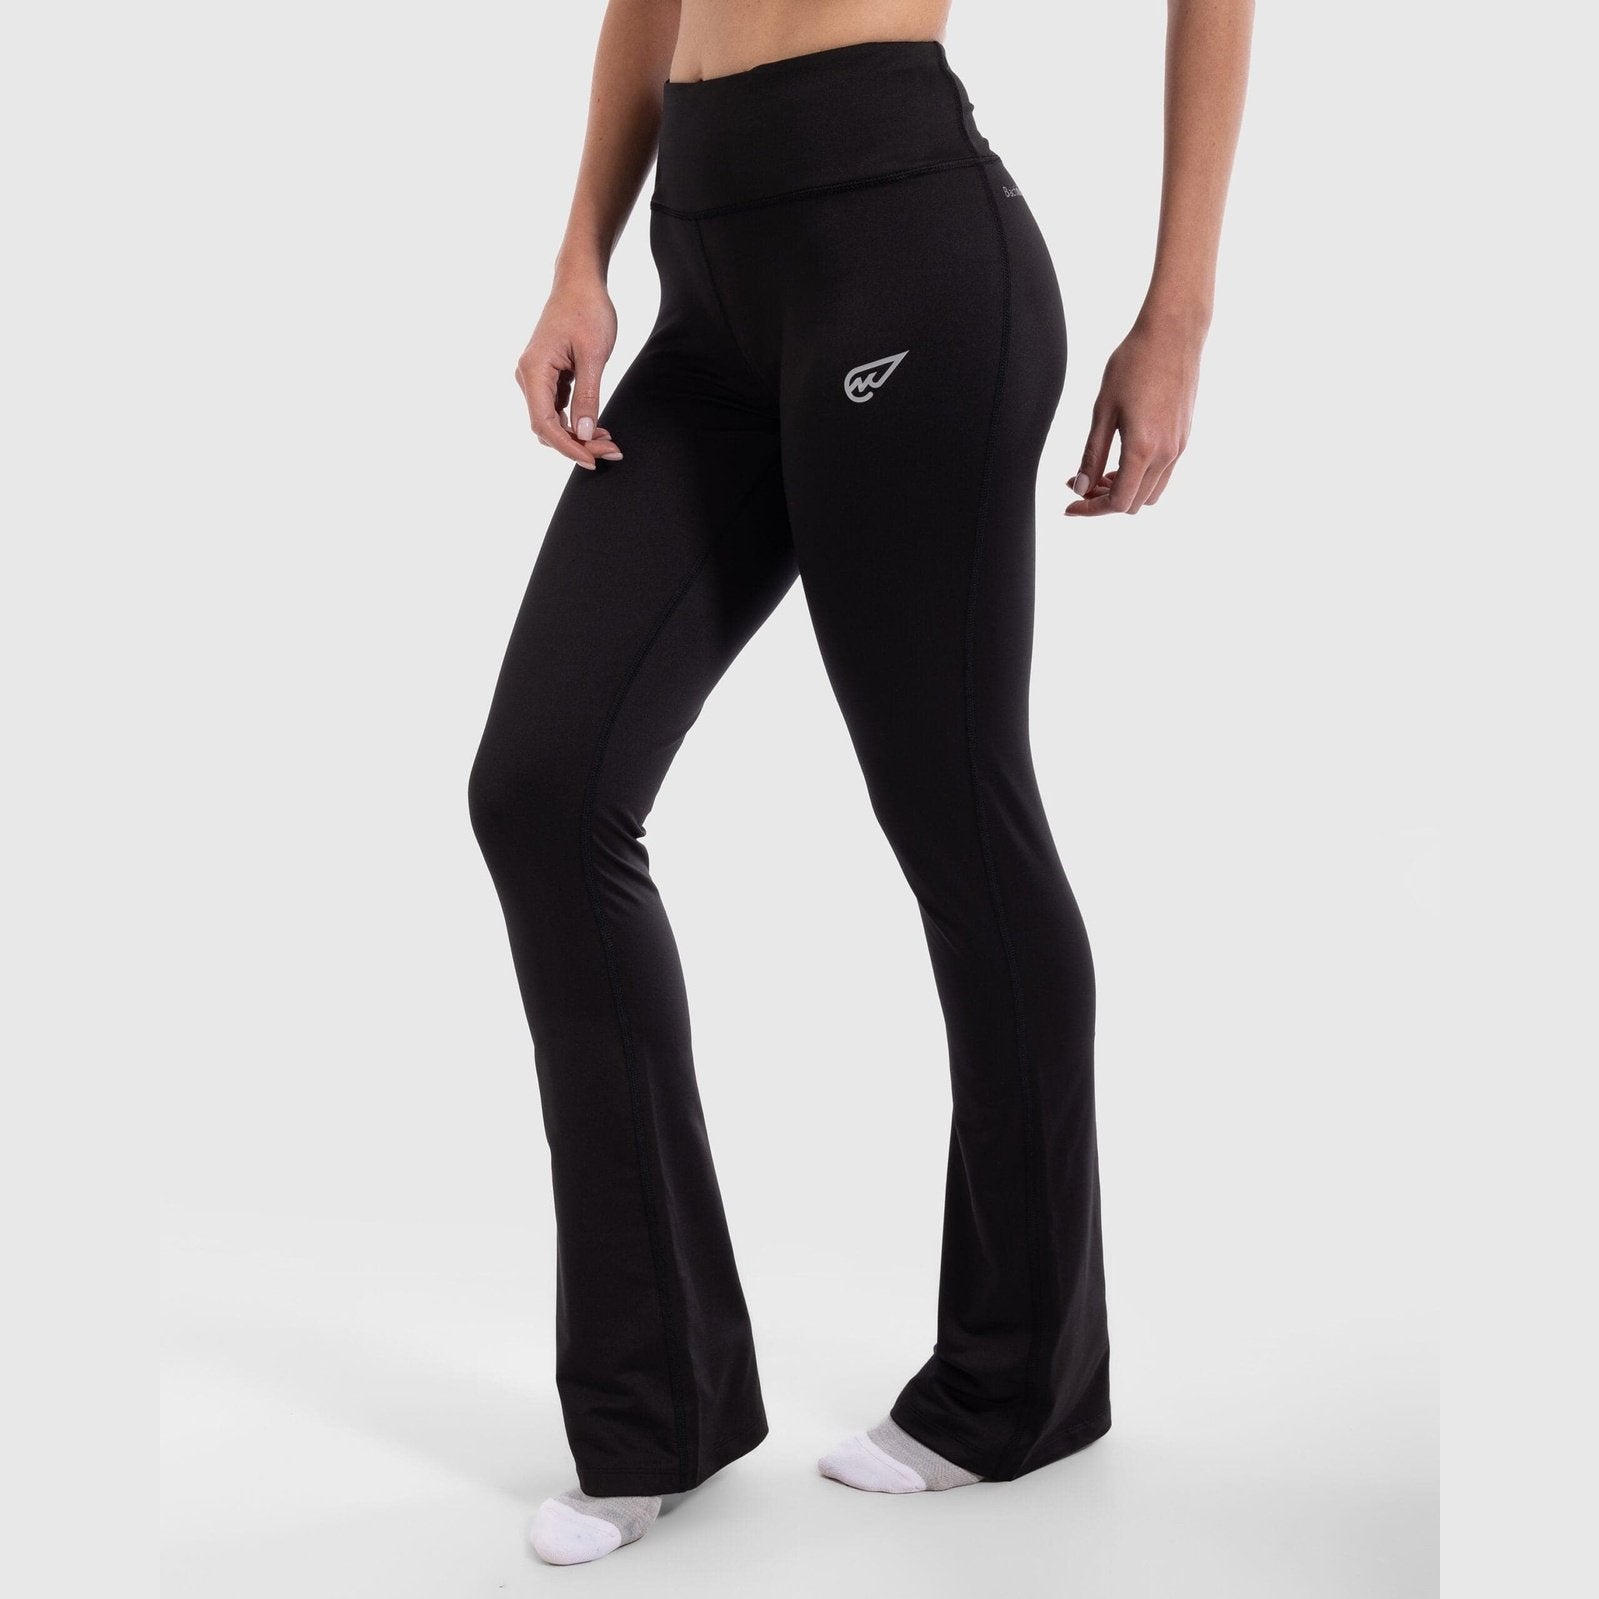 Align High Waisted Yoga Pants - Sporty Pro